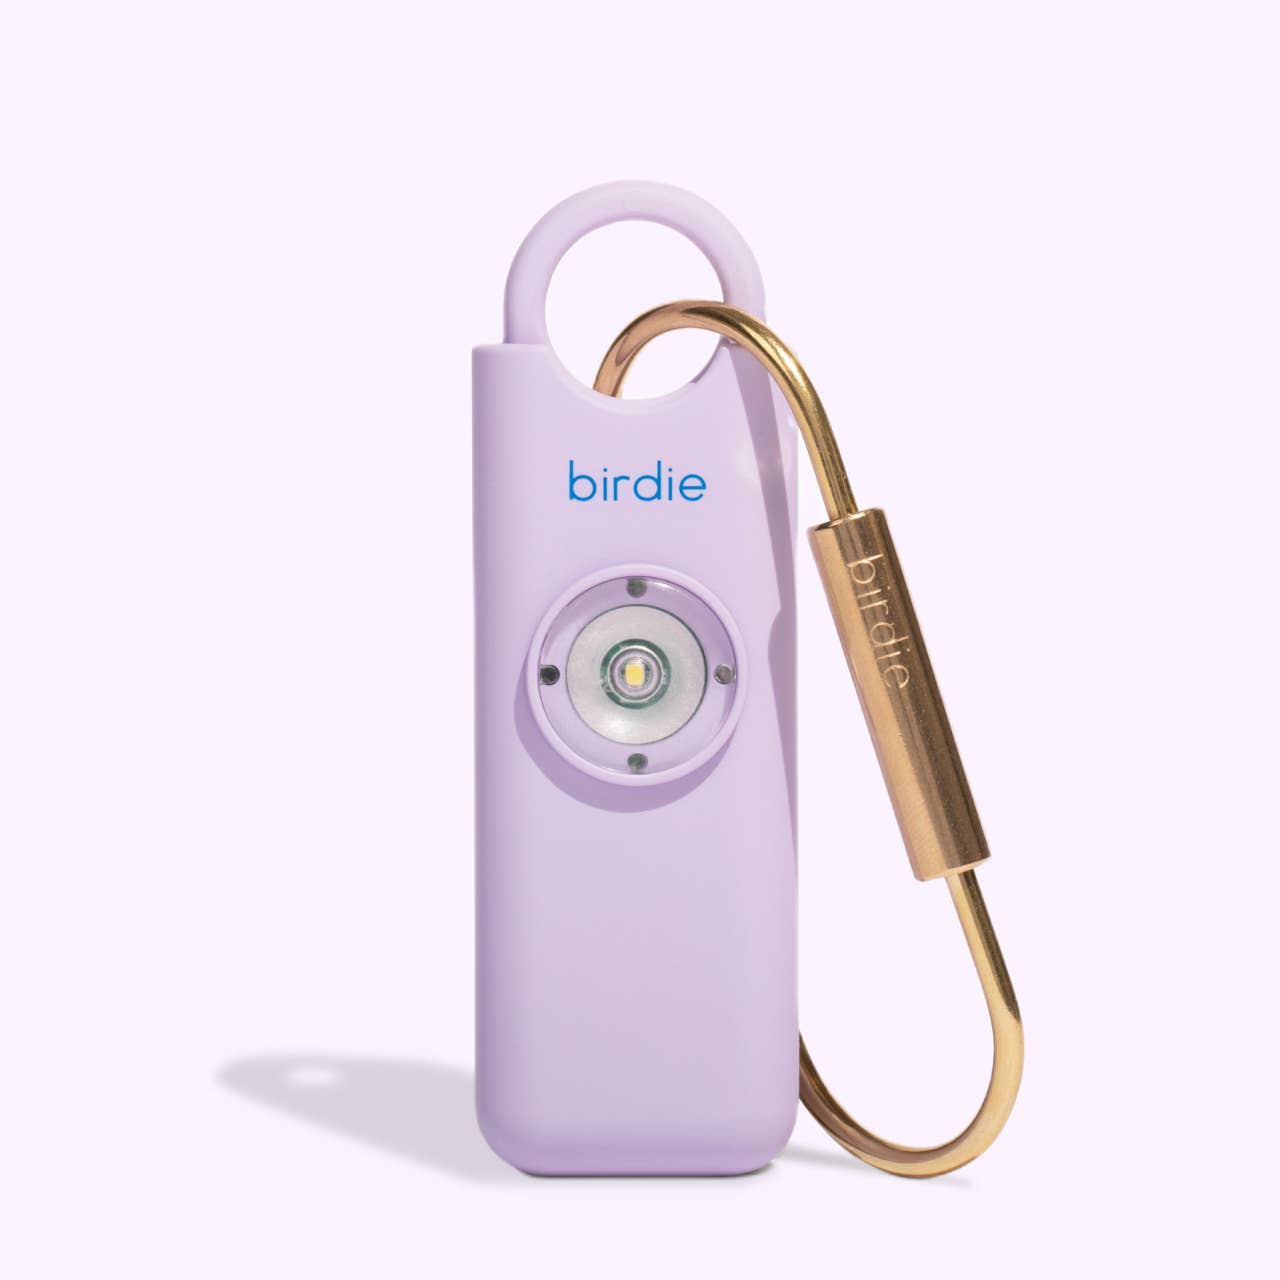 She's Birdie - She's Birdie Personal Safety Alarm: Single / Lavender